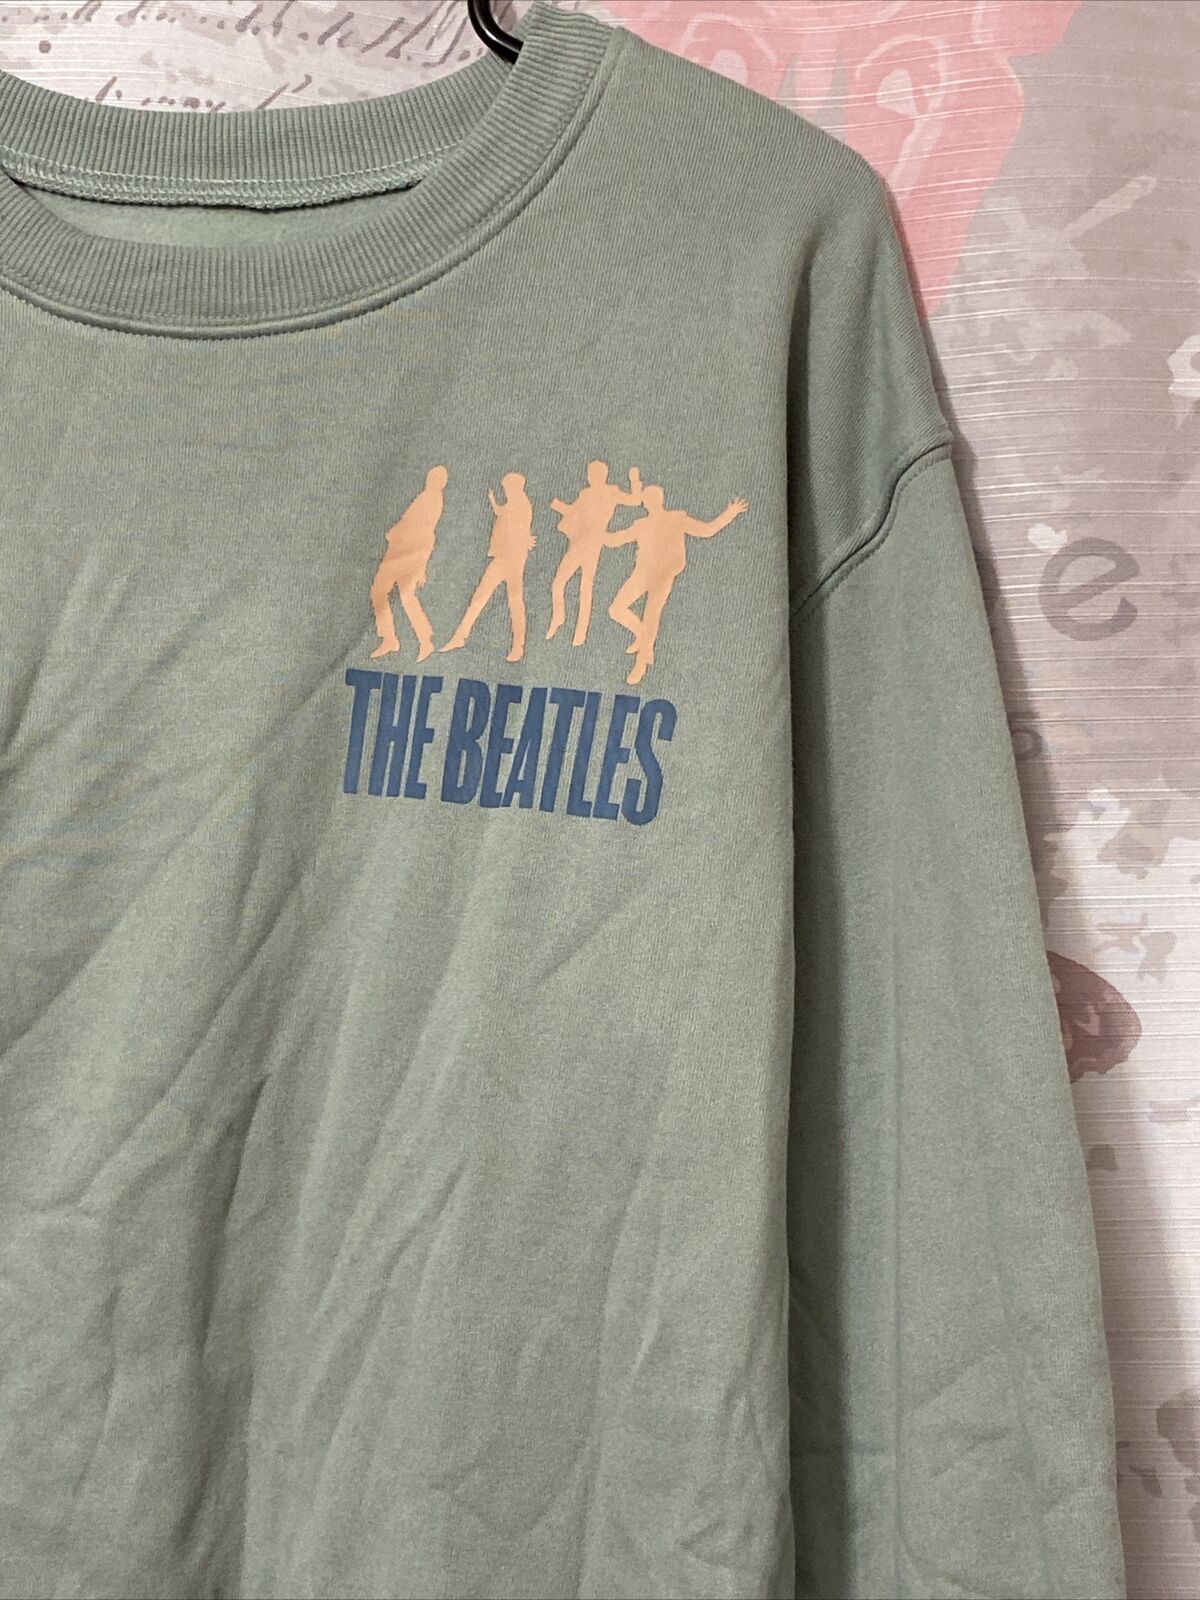 With The Beatles Sweatshirt Women’s Small -2020 C… - image 2